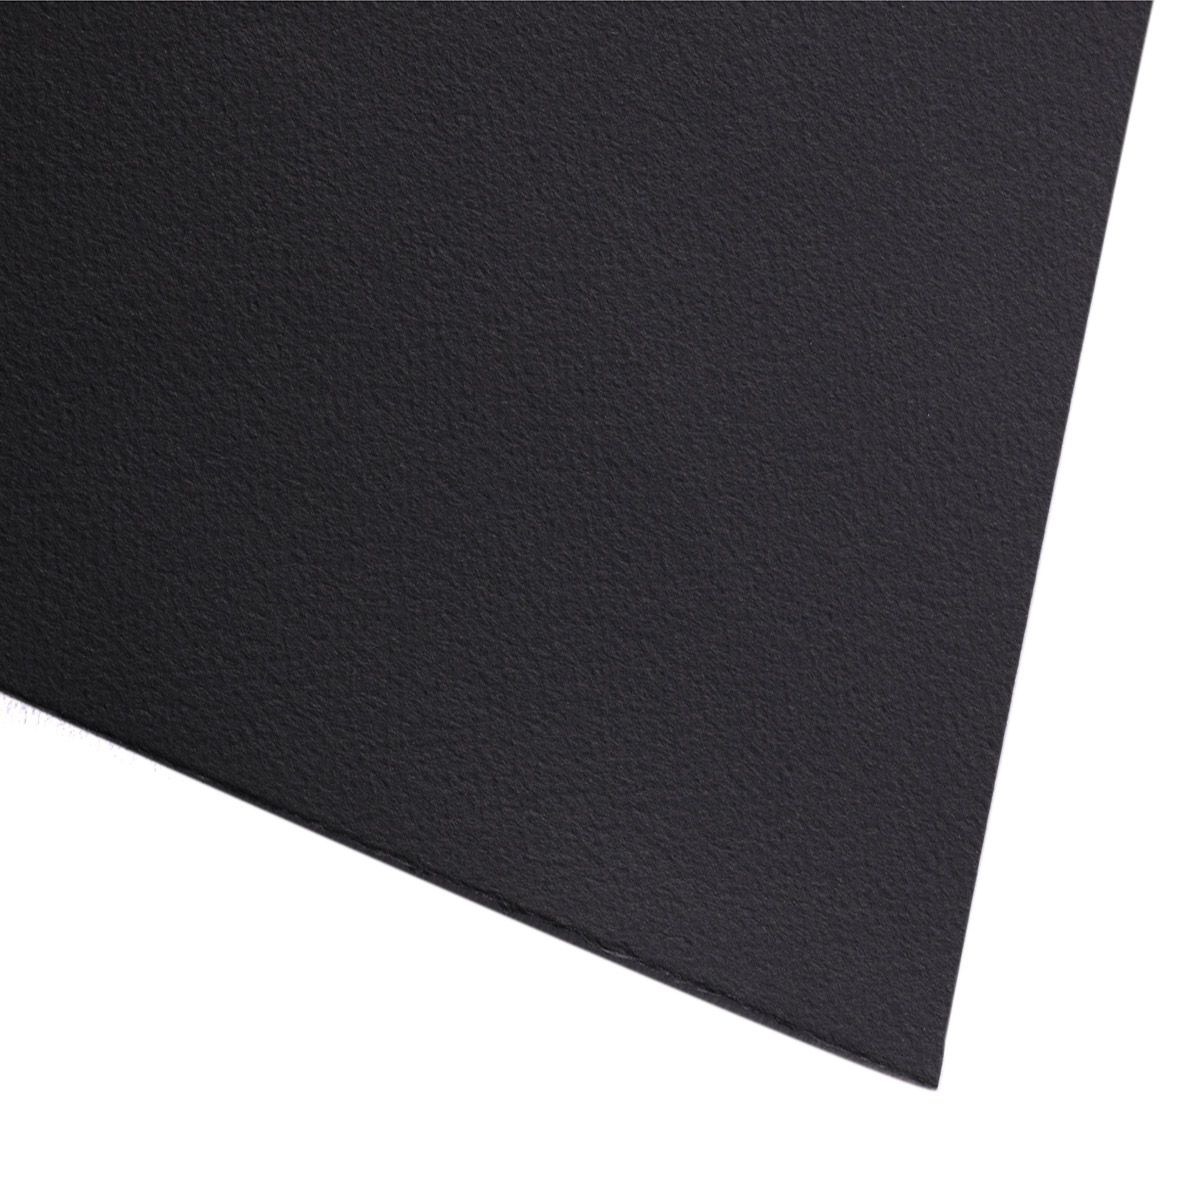 Fabriano Cromia Paper Sheet Black 19.6" x 25.5"